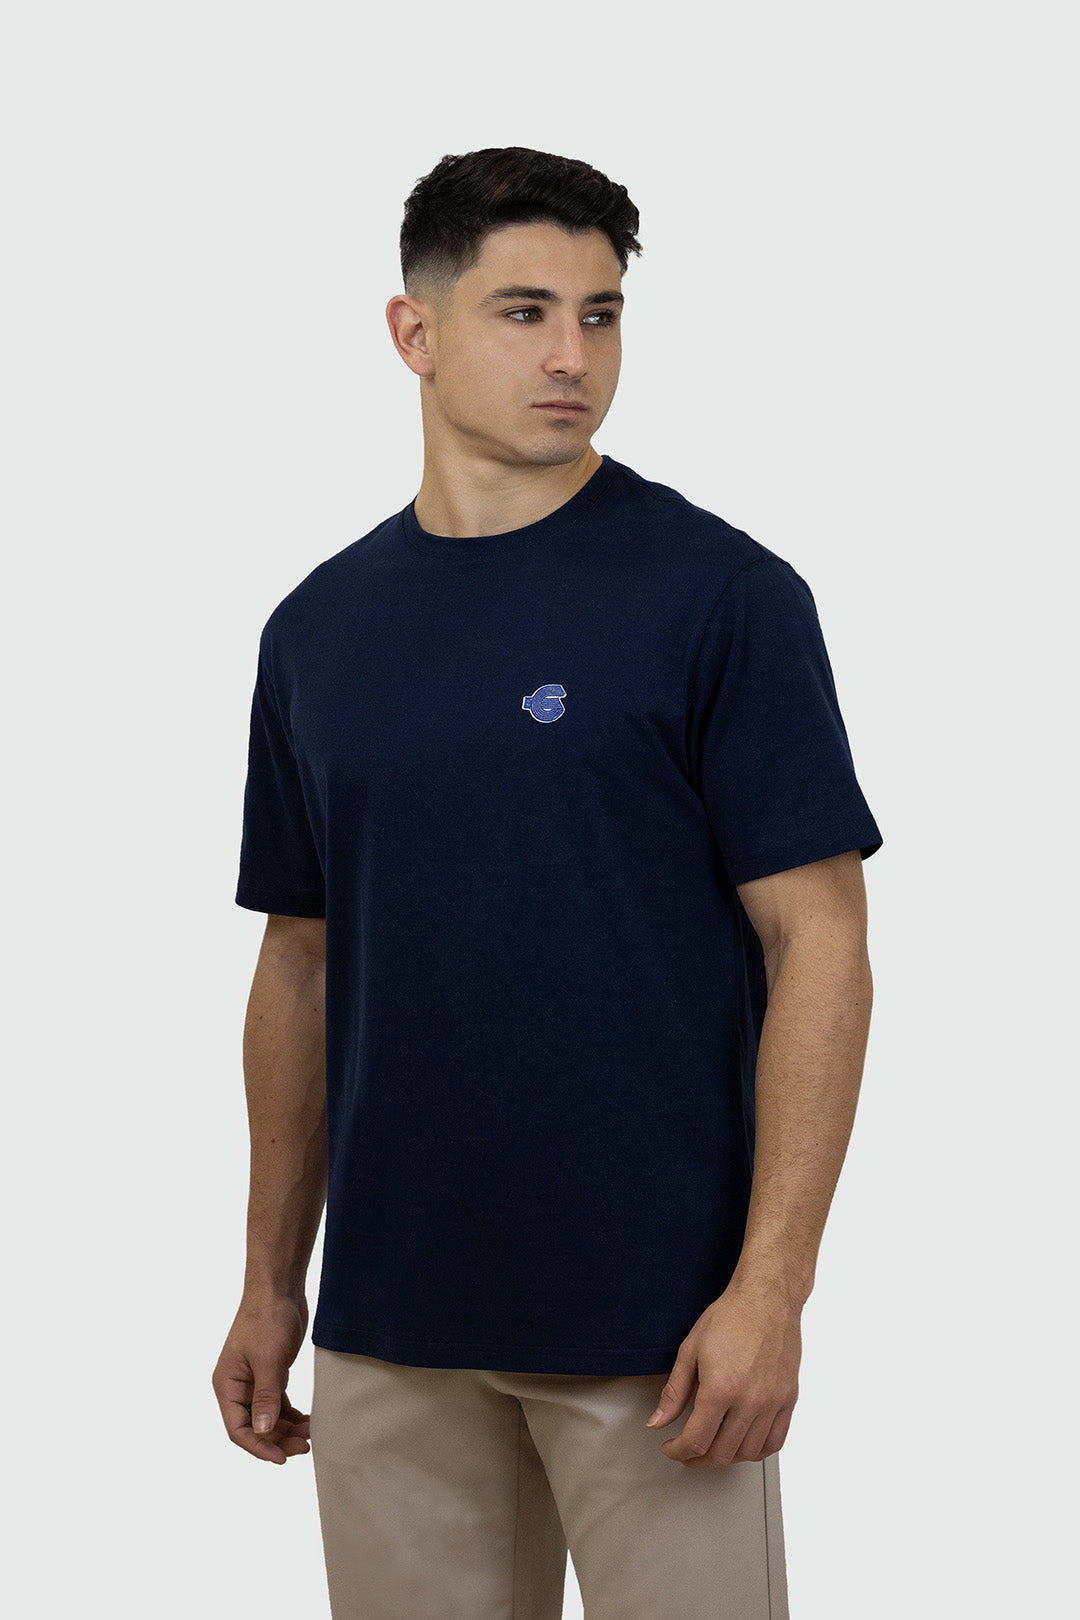 Tee Navy Shirt